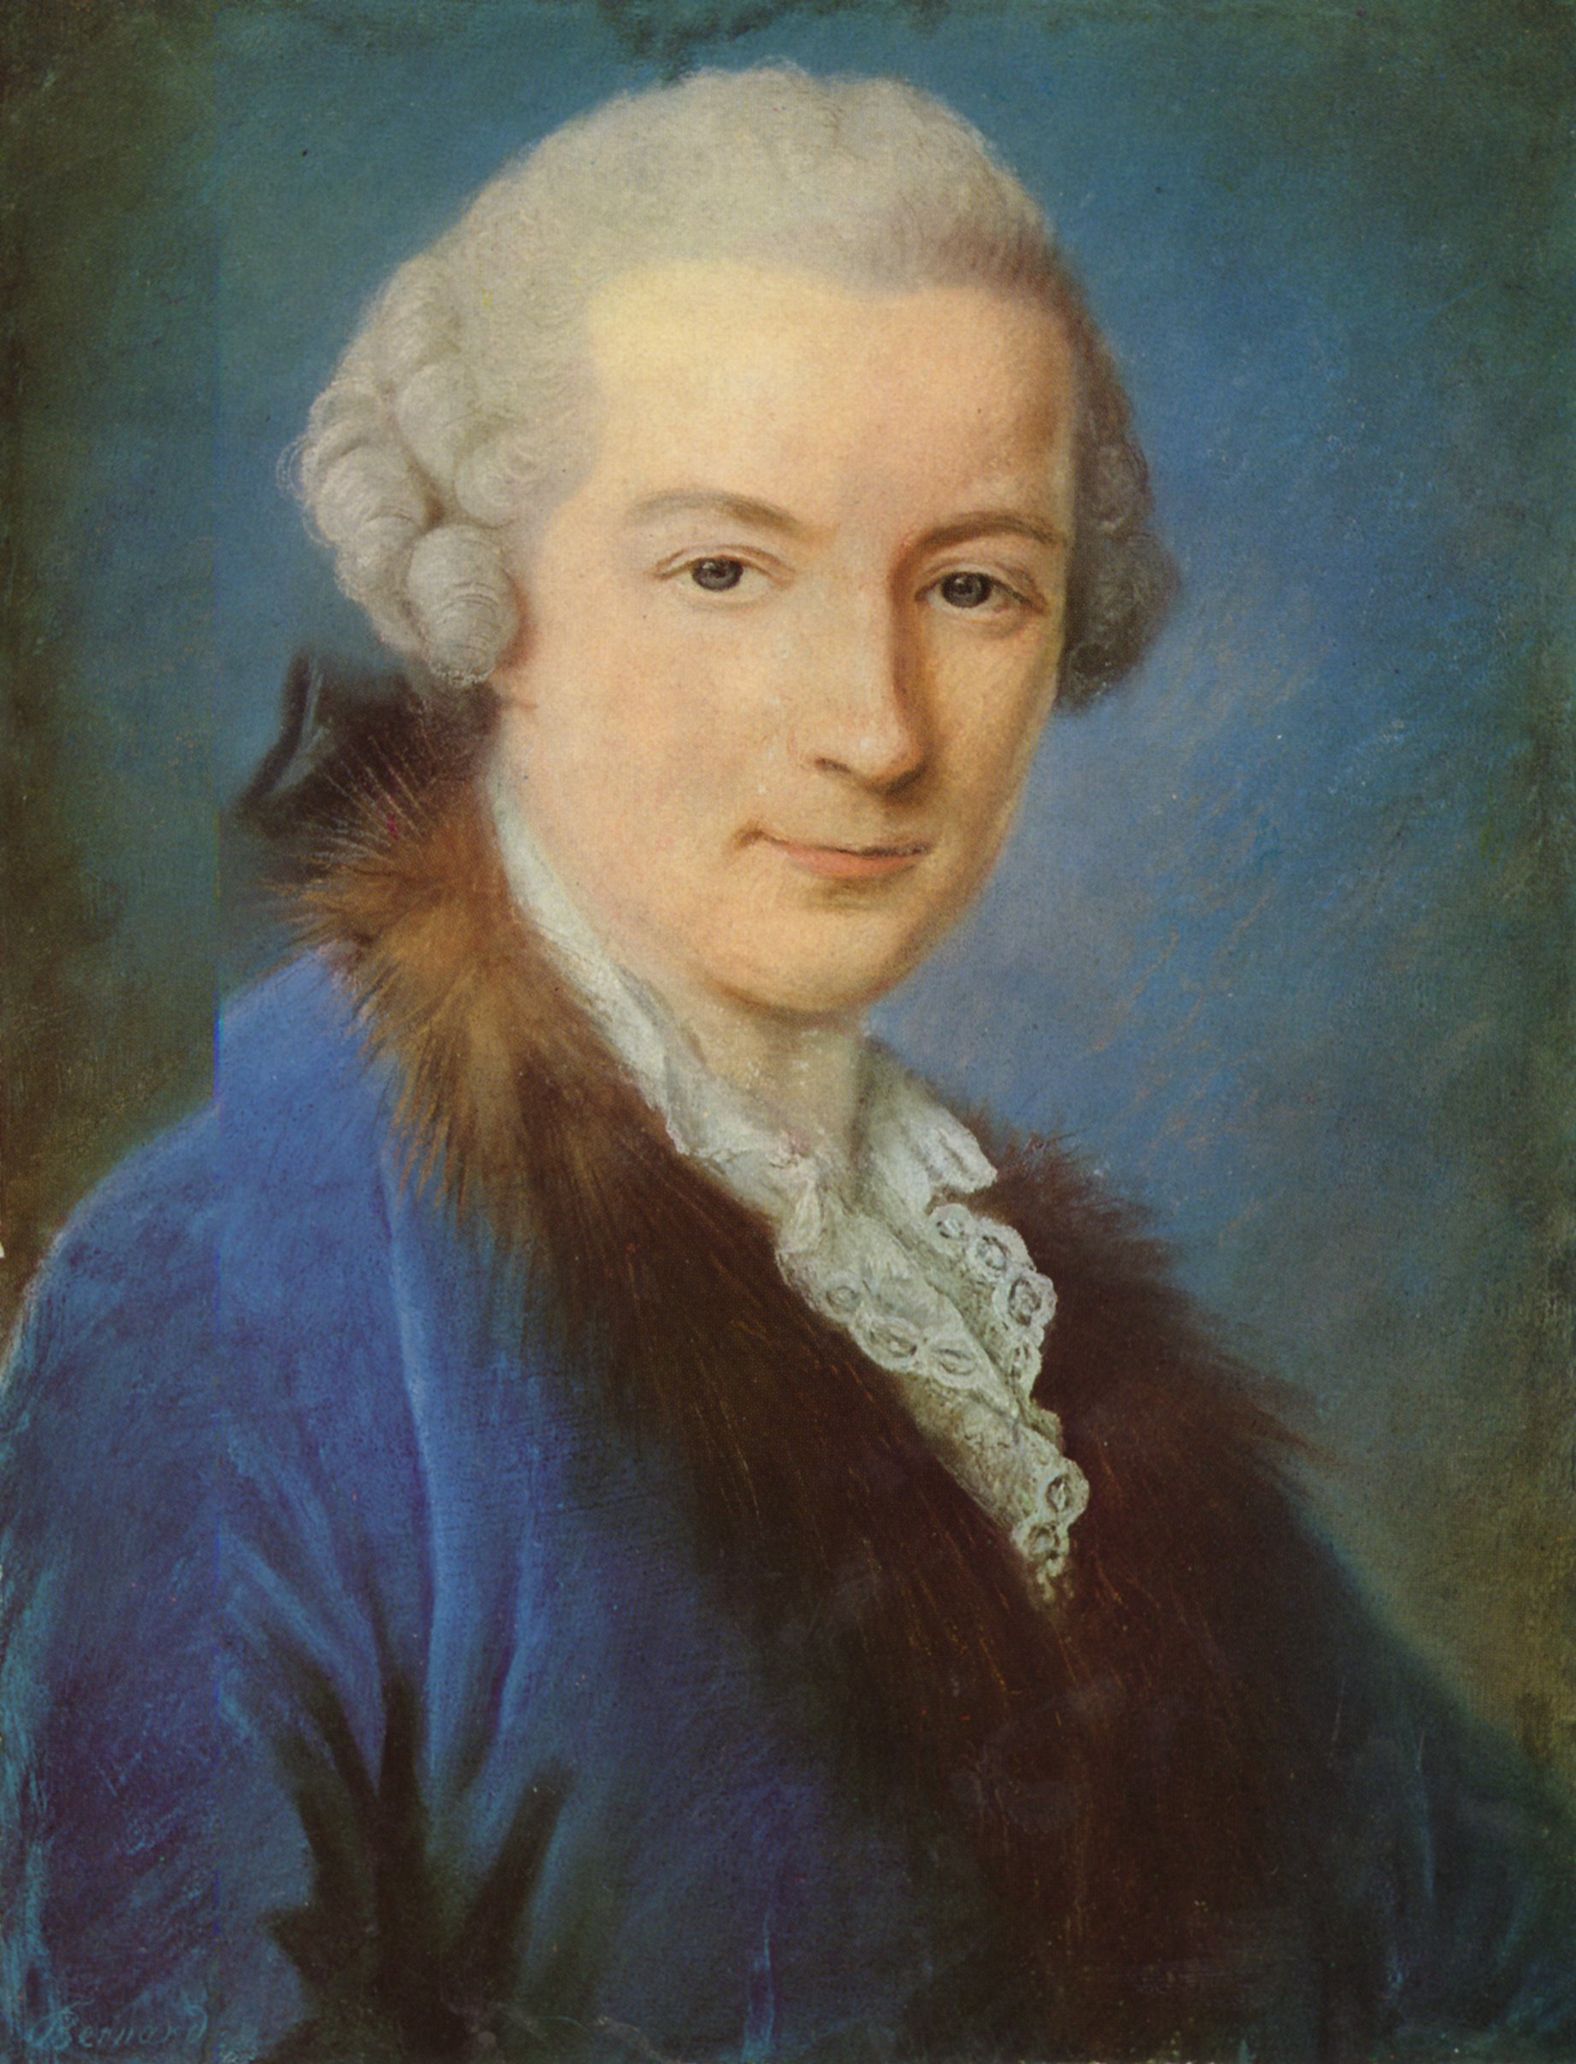 Großbild: <b>Pierre Bernard</b>: Porträt eines jungen Mannes - pierre-bernard-portraet-eines-jungen-mannes-00505